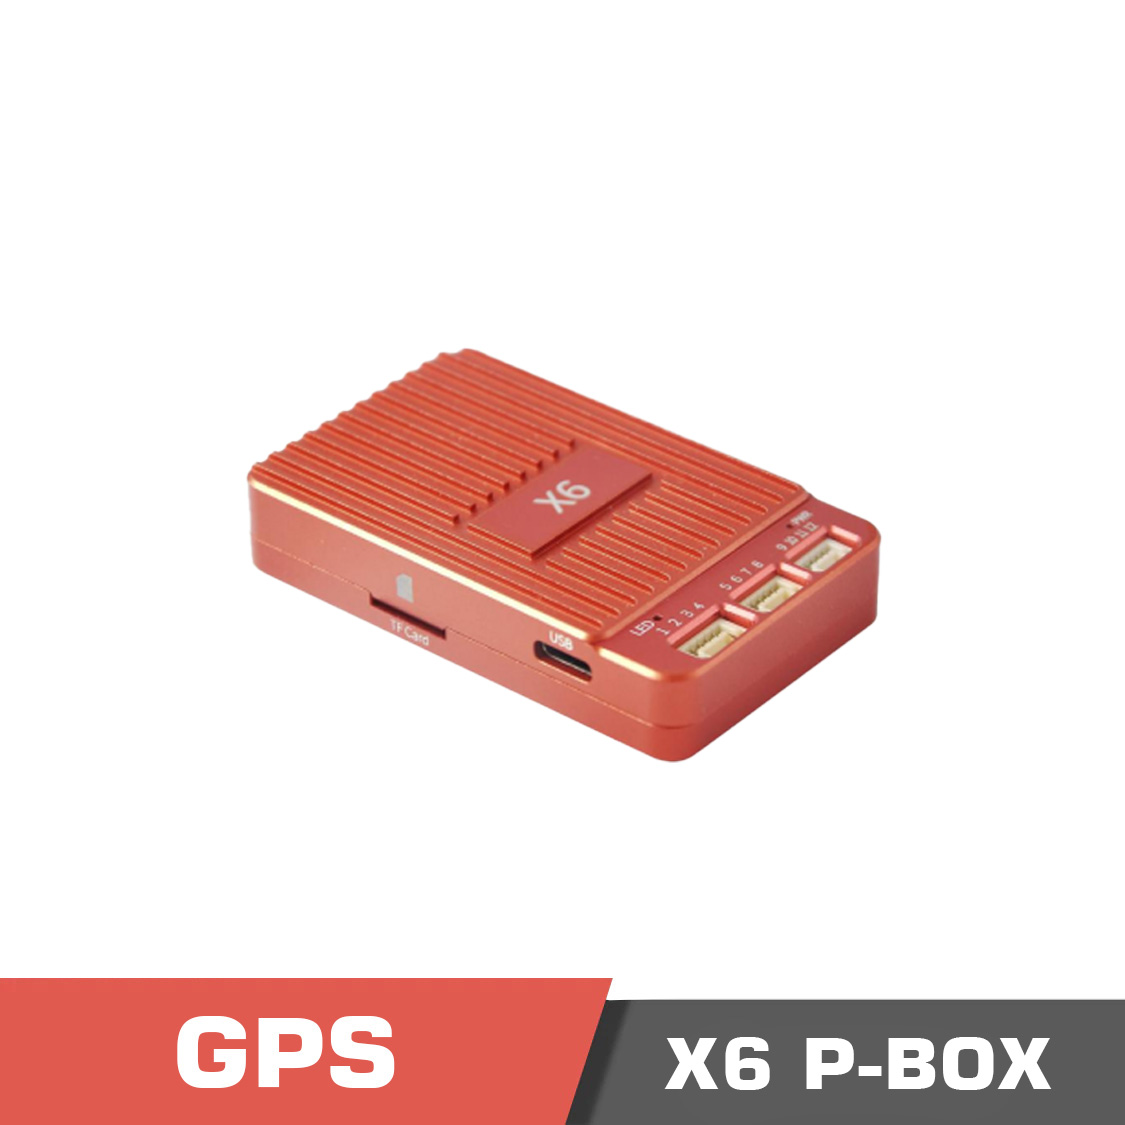 X6 p box. Temp. 1 - cuav neo 3x,neo 3x,gps sensor,gnss positioning,gps uav,neo 3x gnss receiver,drone navigation system,m9n receiver technology,cuav,gnss receiver - motionew - 1